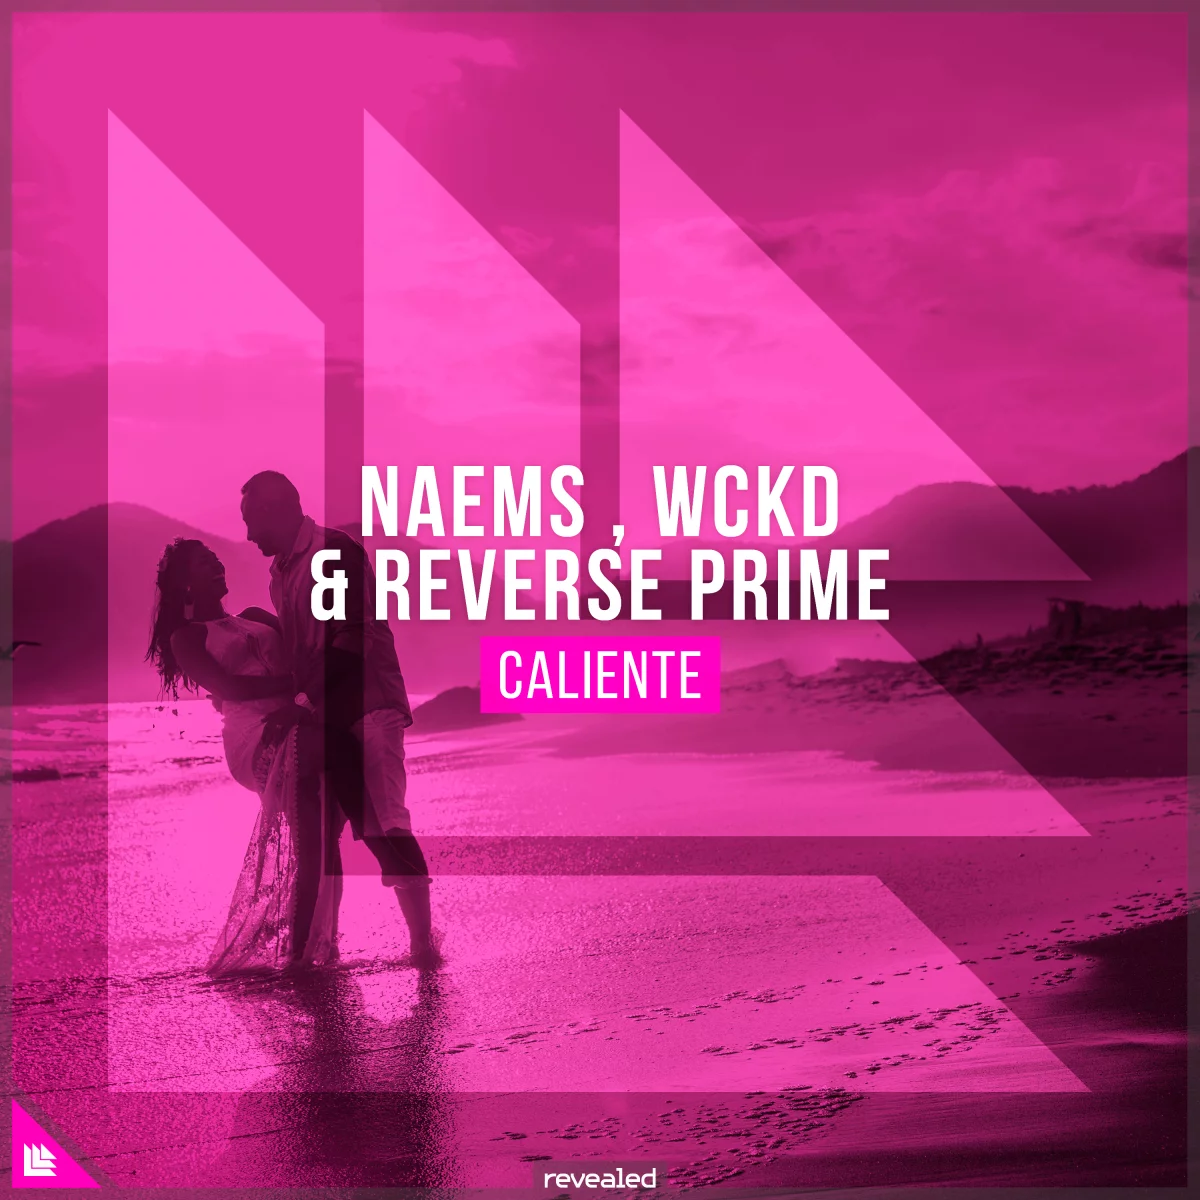 Caliente - NAEMS⁠ WCKD⁠ Reverse Prime⁠ 